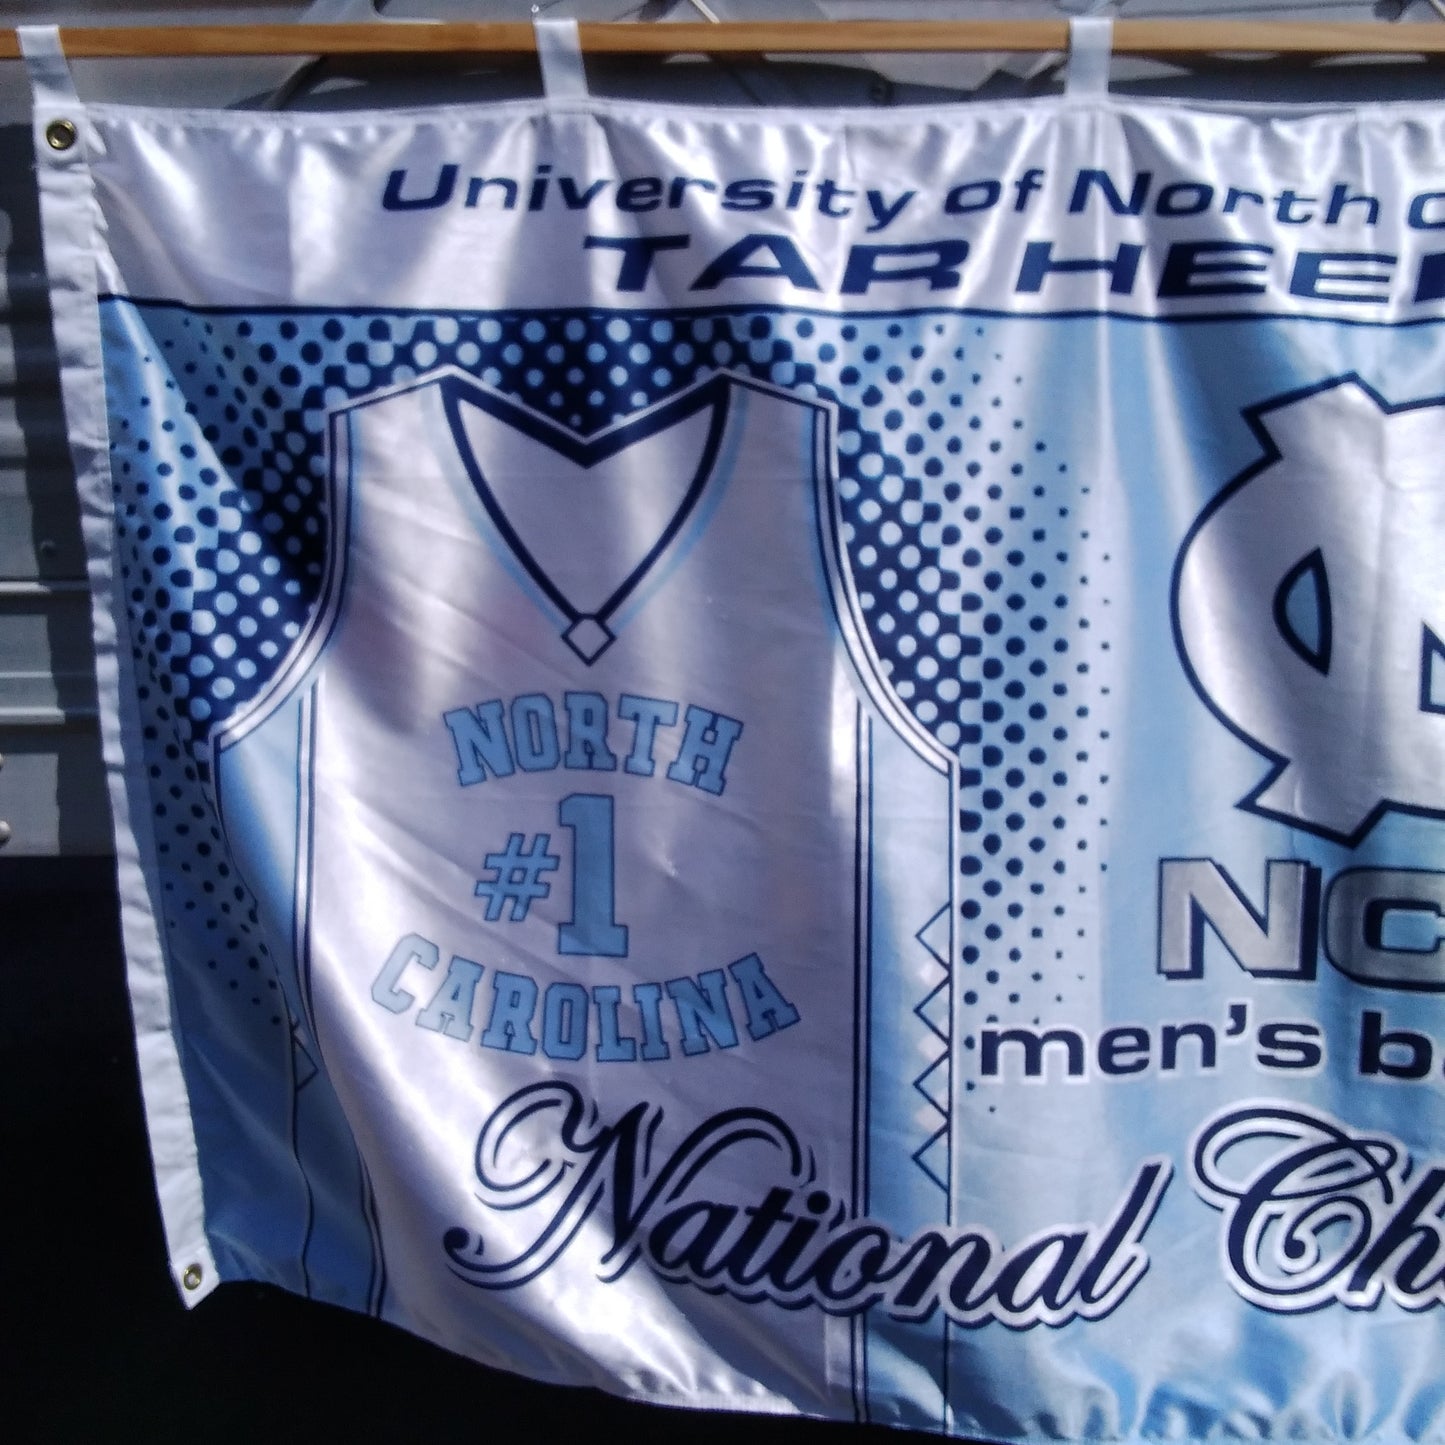 North Carolina Tar Heels 2005 NCAA Men's Basketball National Champion's Flag/Banner